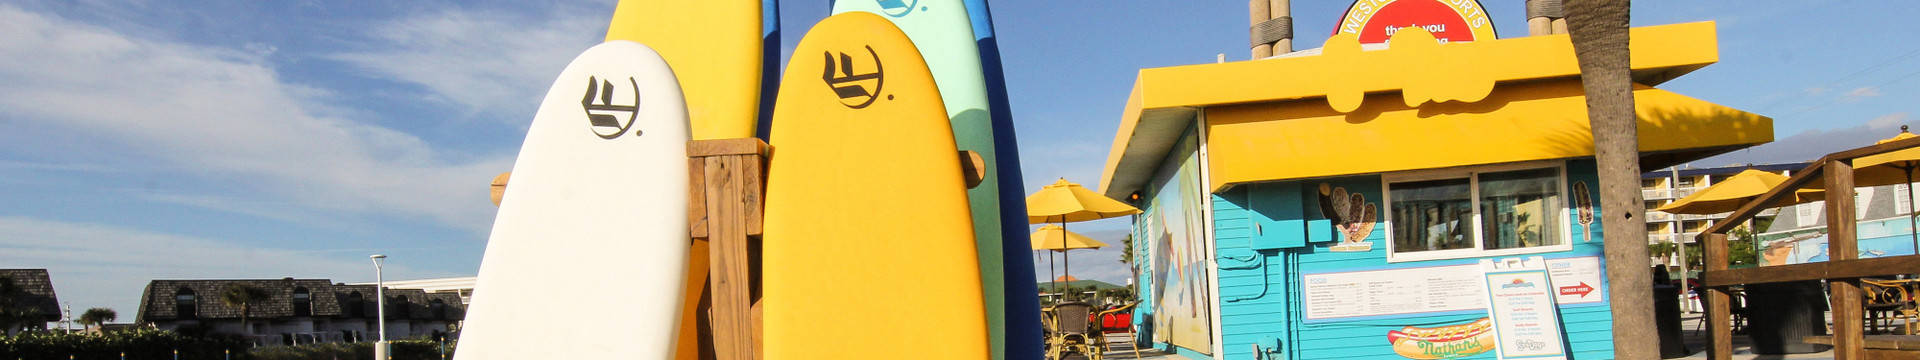 Youth Group Beach Venue In Cocoa Beach - Surf